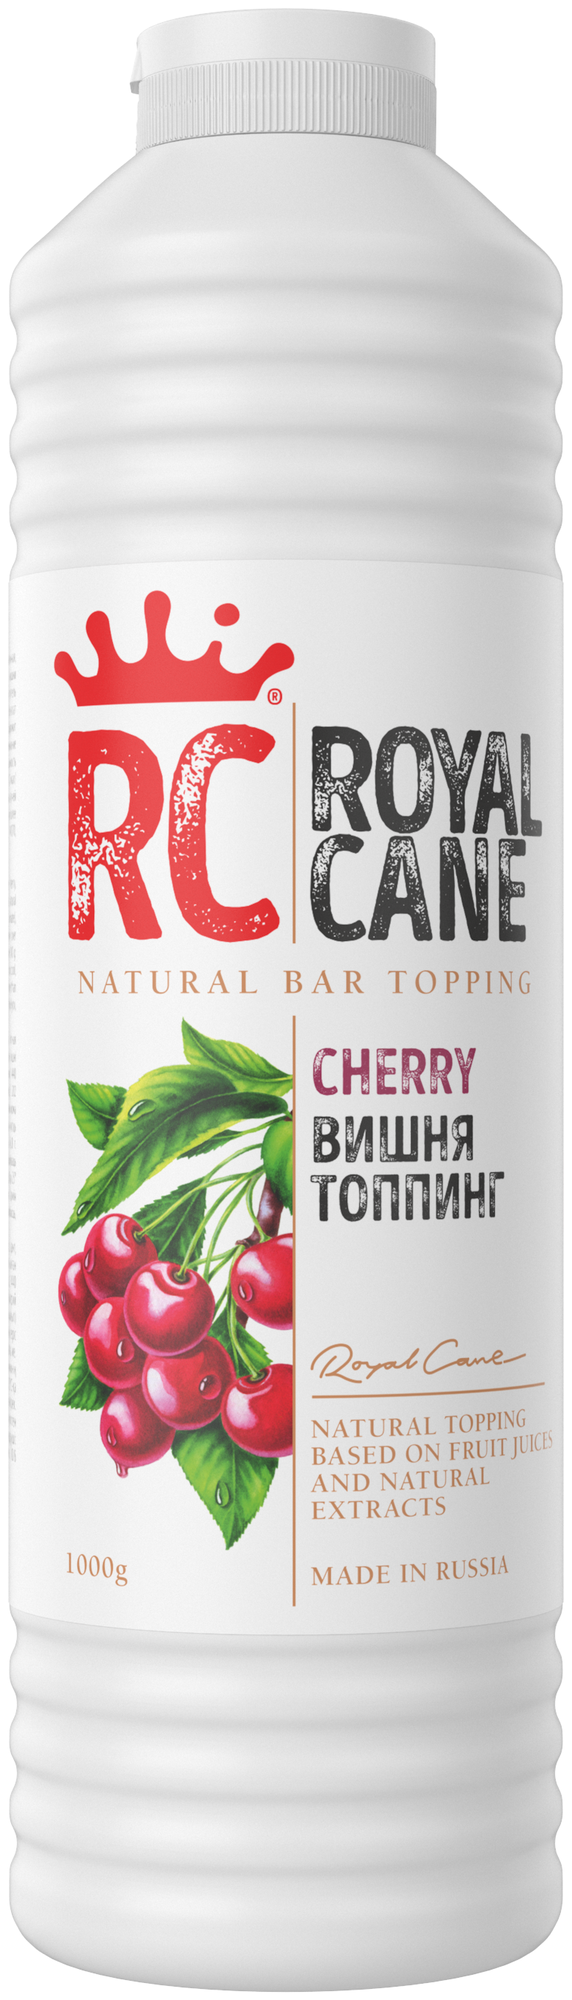 Топпинг Royal Cane "Вишня" 1 кг для кофе, десертов и мороженого.